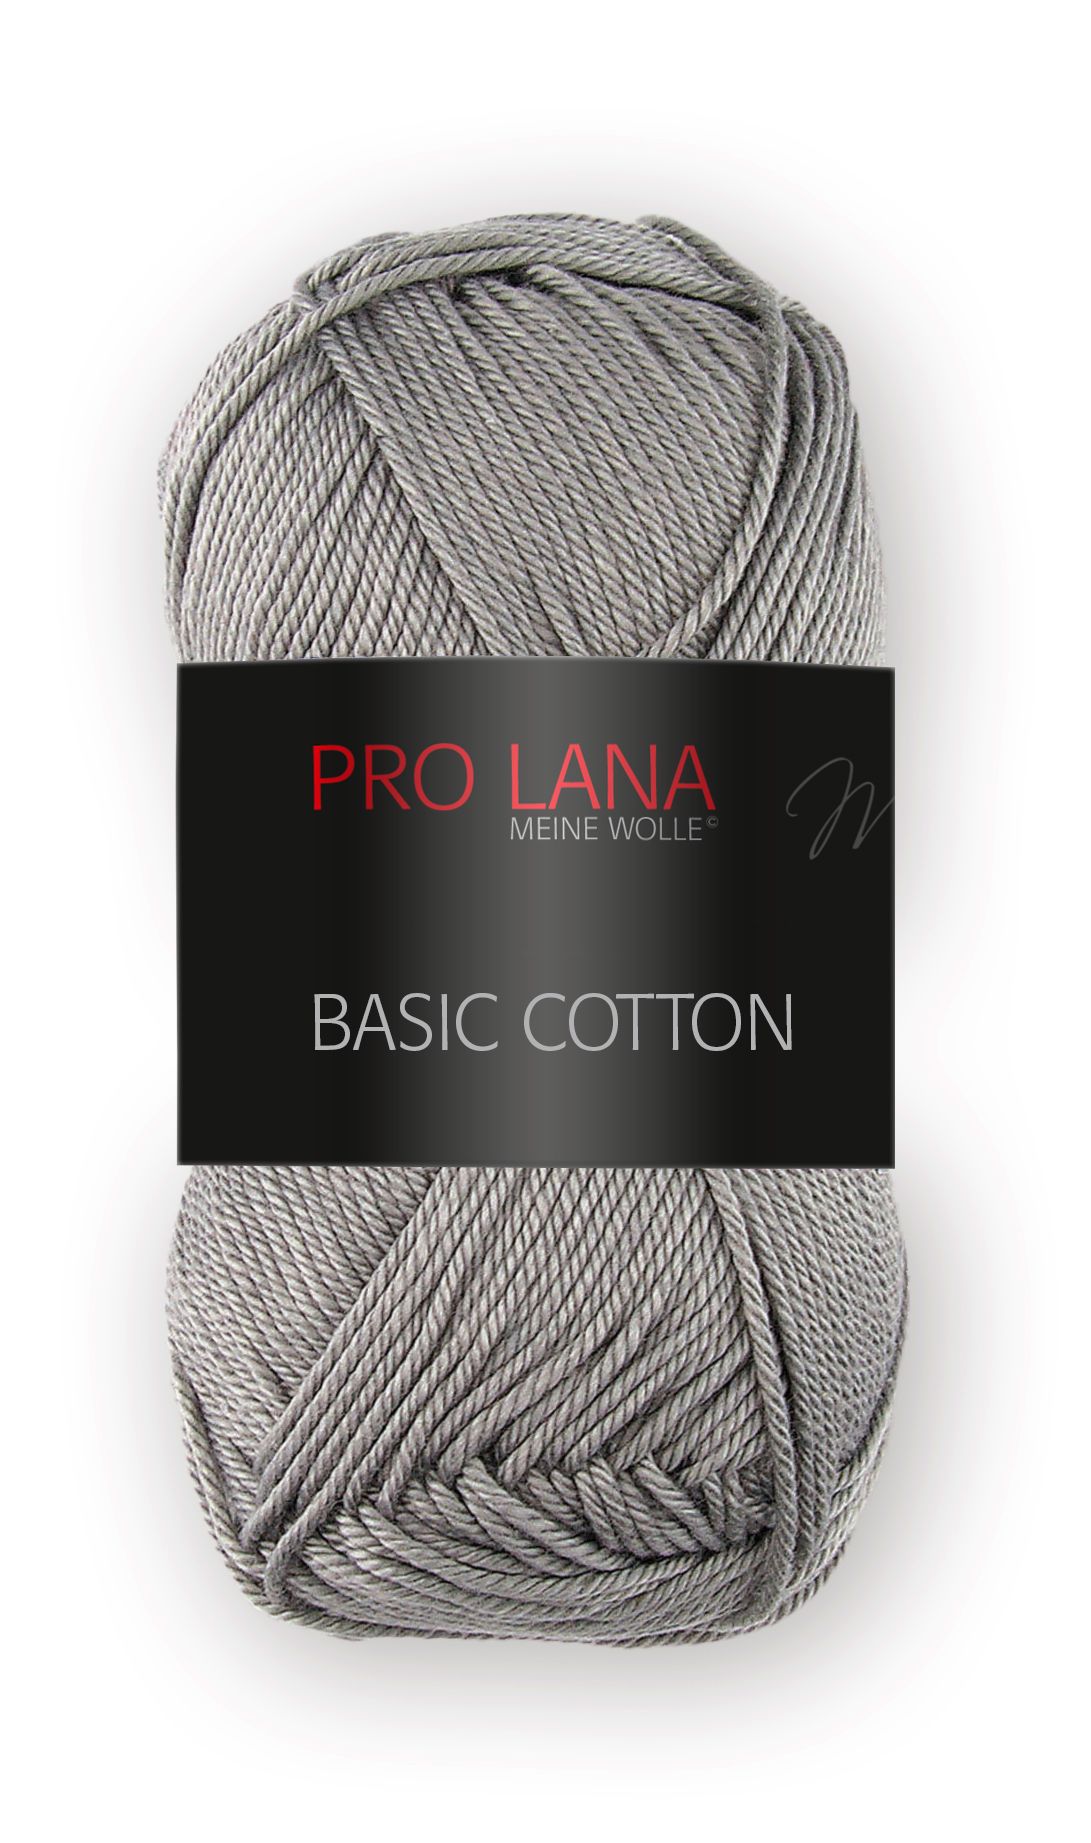 Pro Lana Basic Cotton 50g - Mittelgrau 95